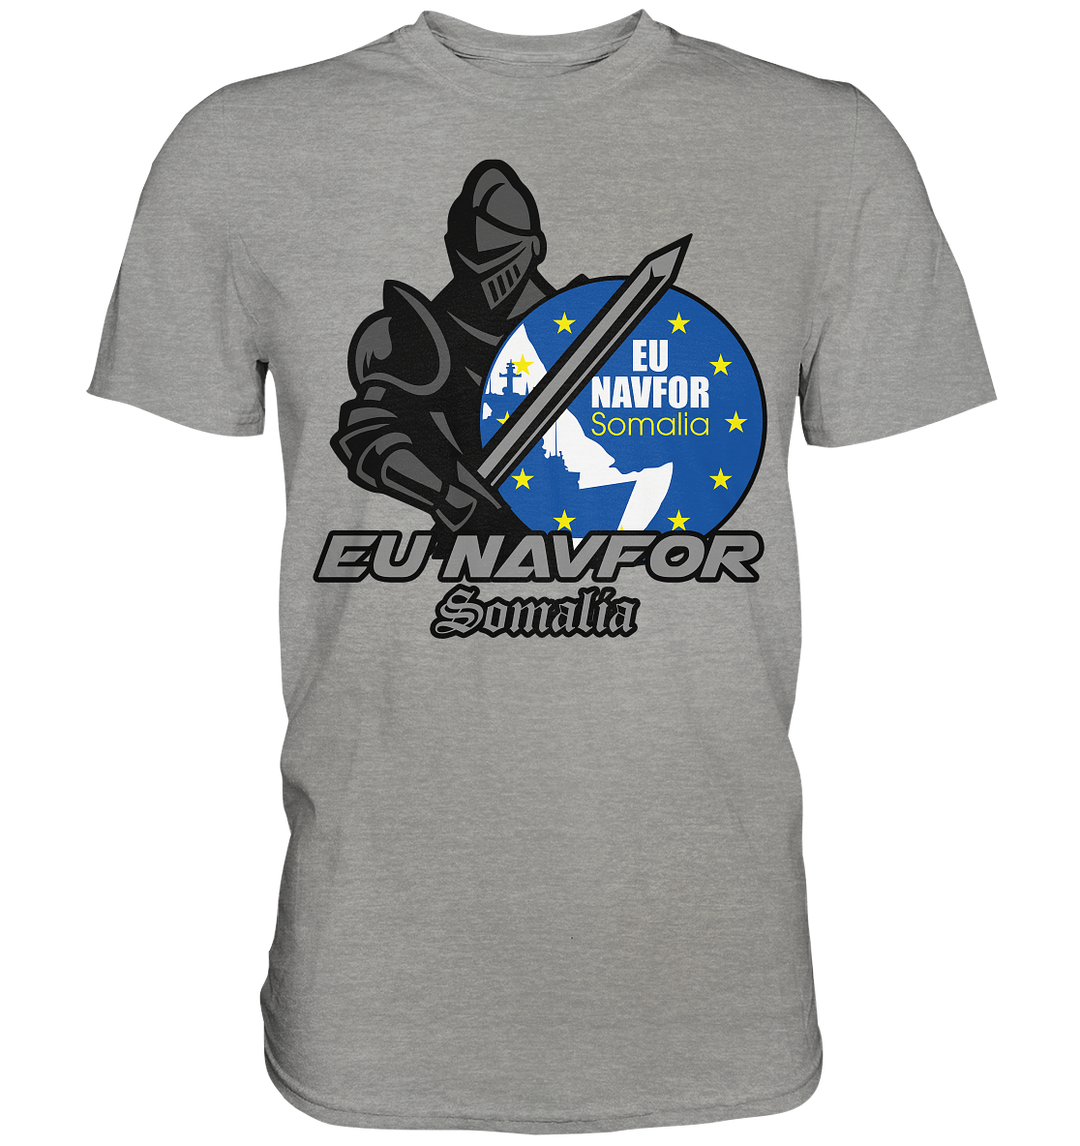 "EUNAVFOR Somalia - Ritter" - Premium Shirt